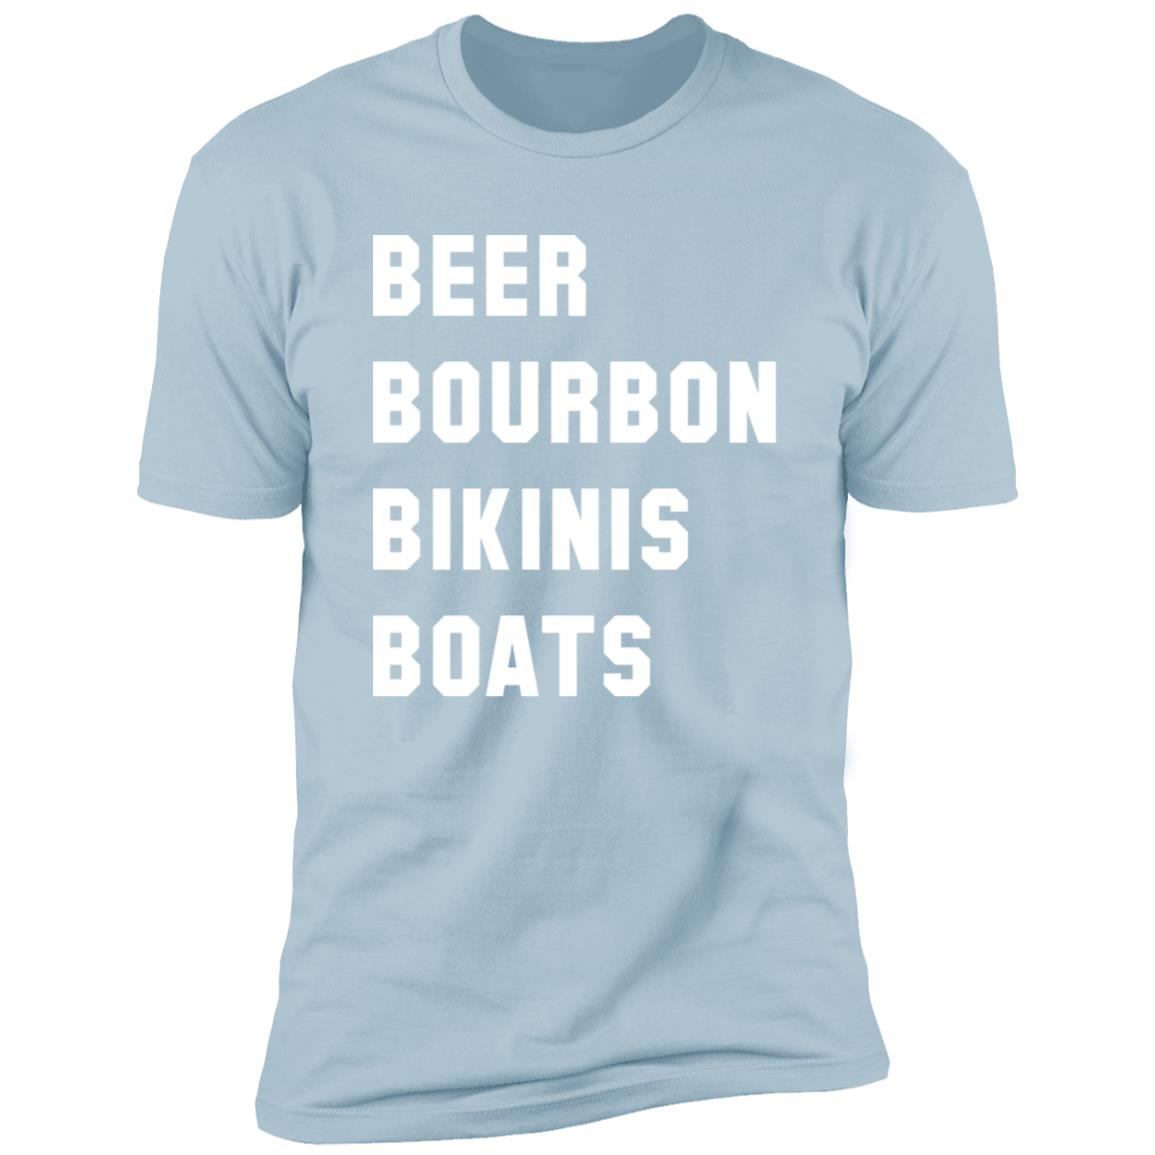 HRCL FL - Beer Bourbon Bikinis Boats - 2 Sided NL3600 Premium Short Sleeve T-Shirt